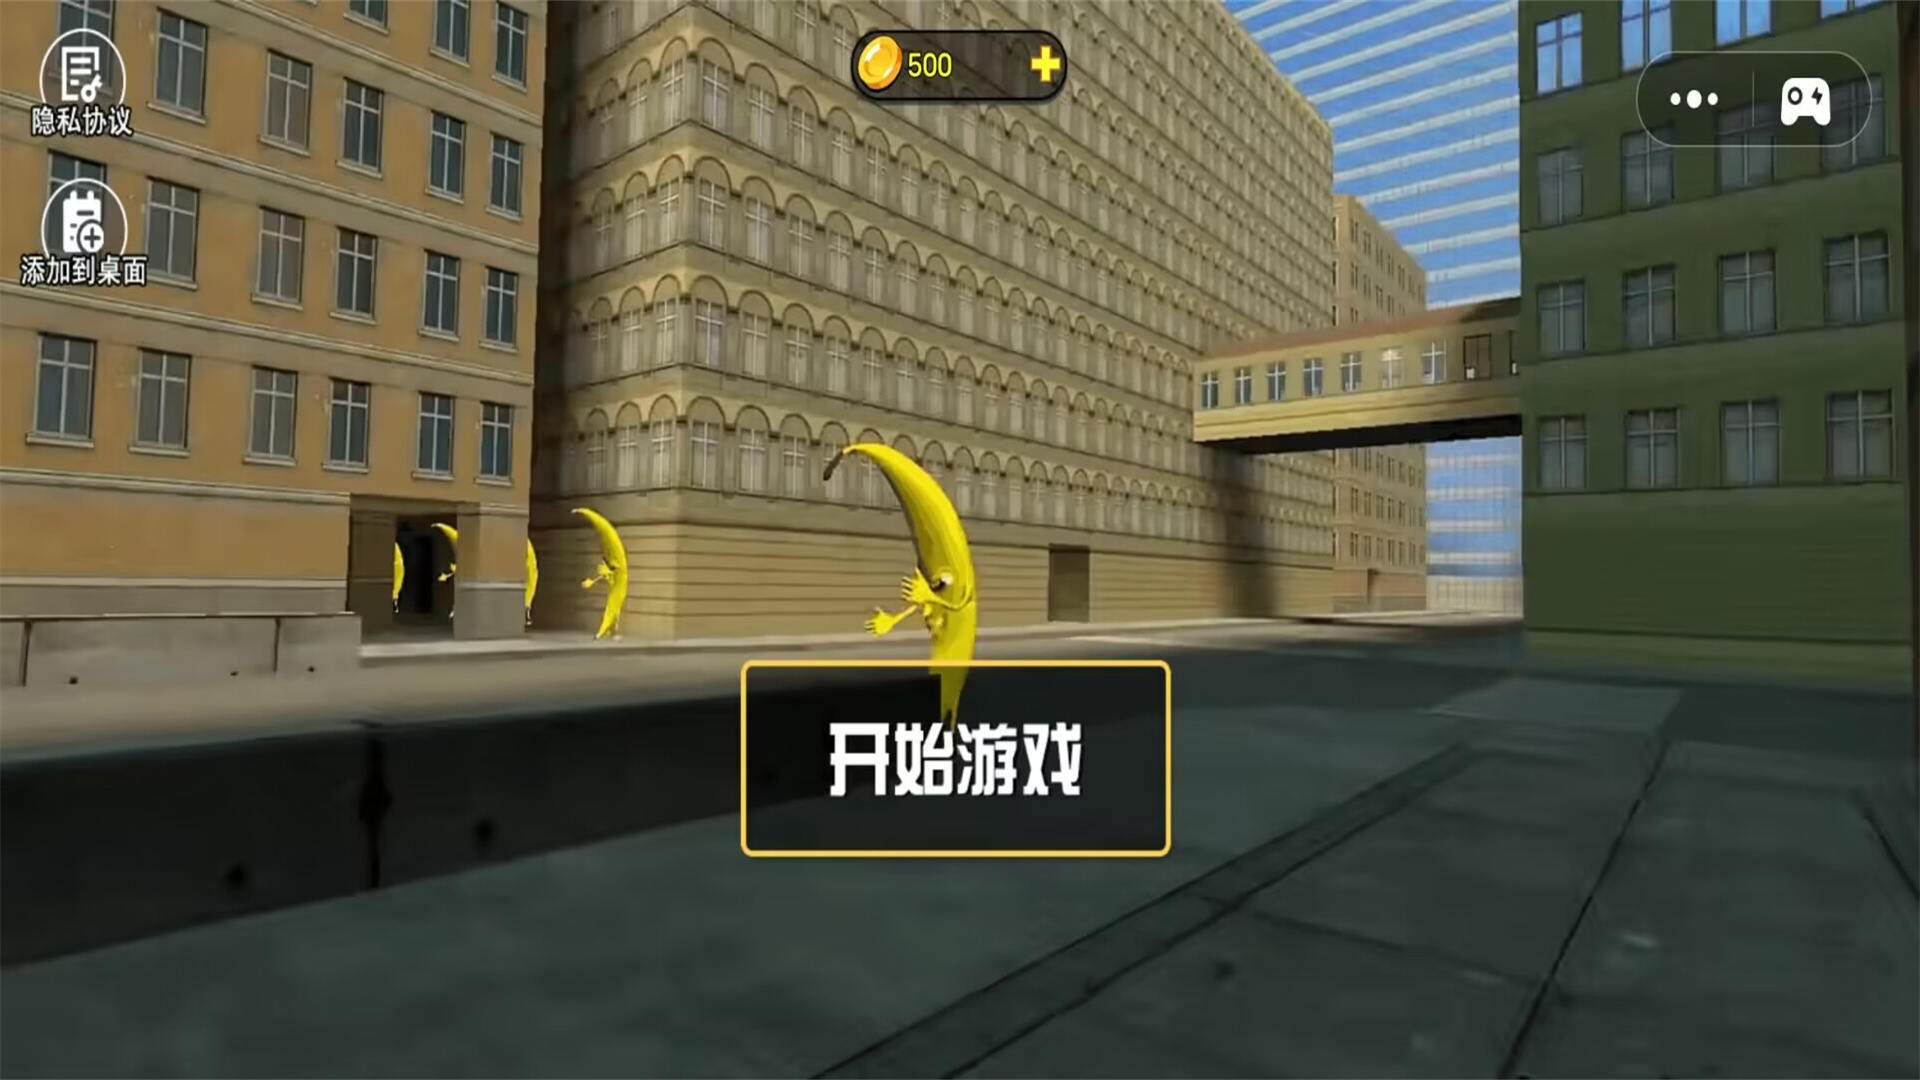 3D迷宫逃脱挑战游戏手机版图片1